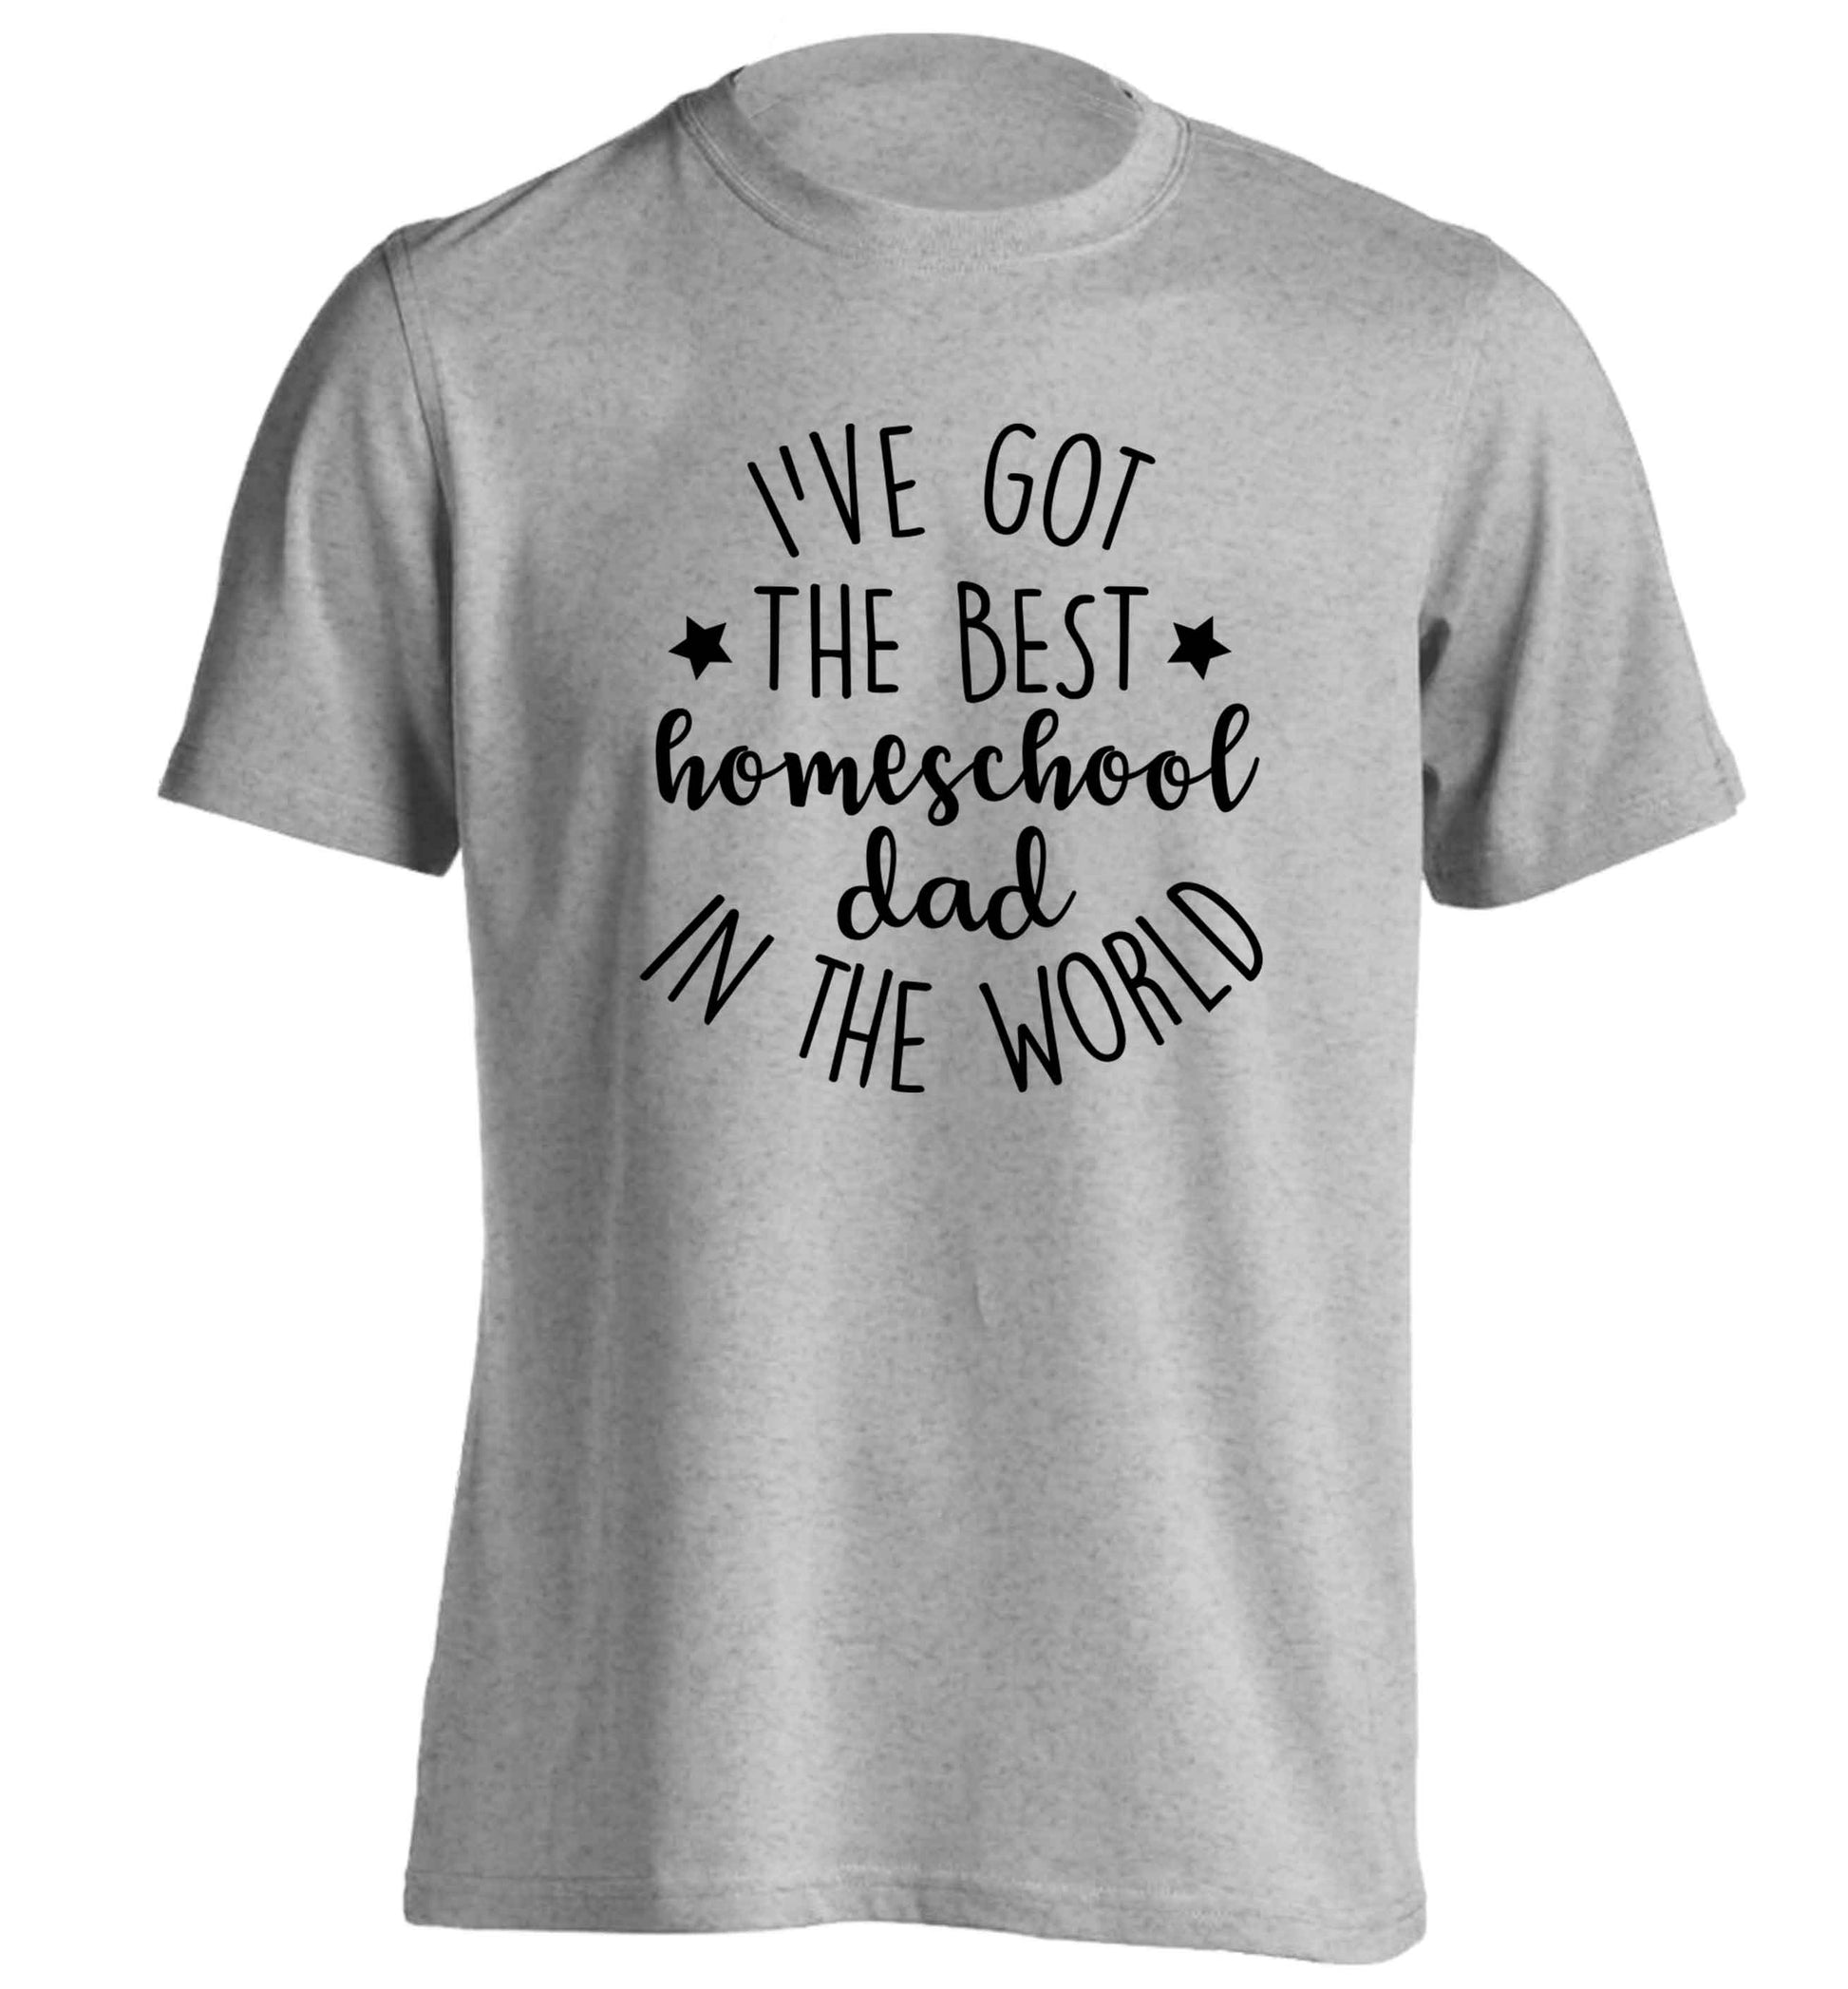 I've got the best homeschool dad in the world adults unisex grey Tshirt 2XL